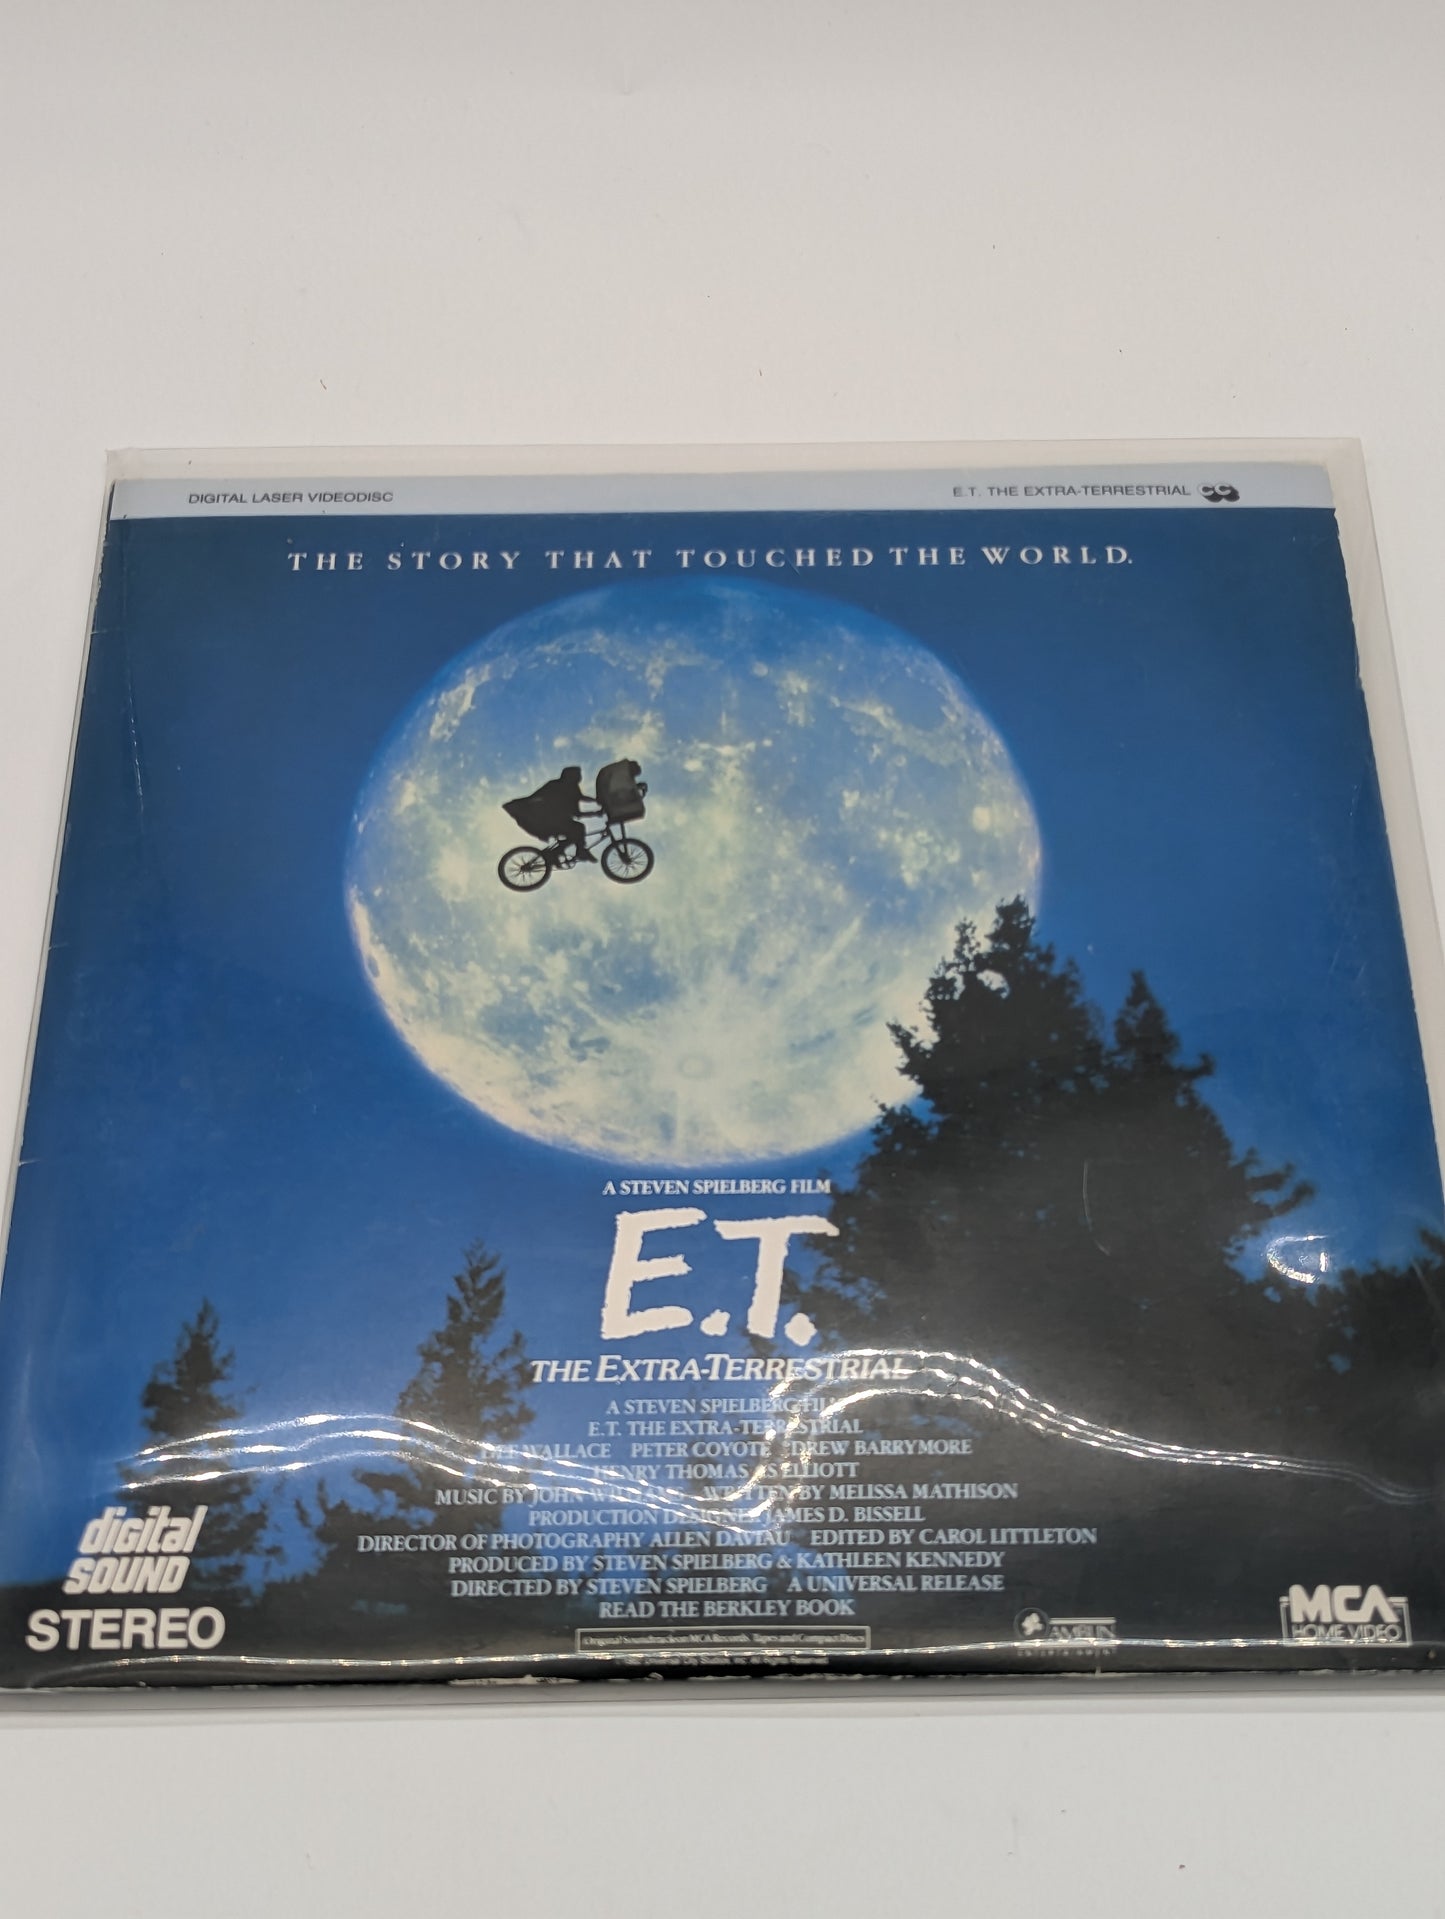 LaserDisc (1981-2009)